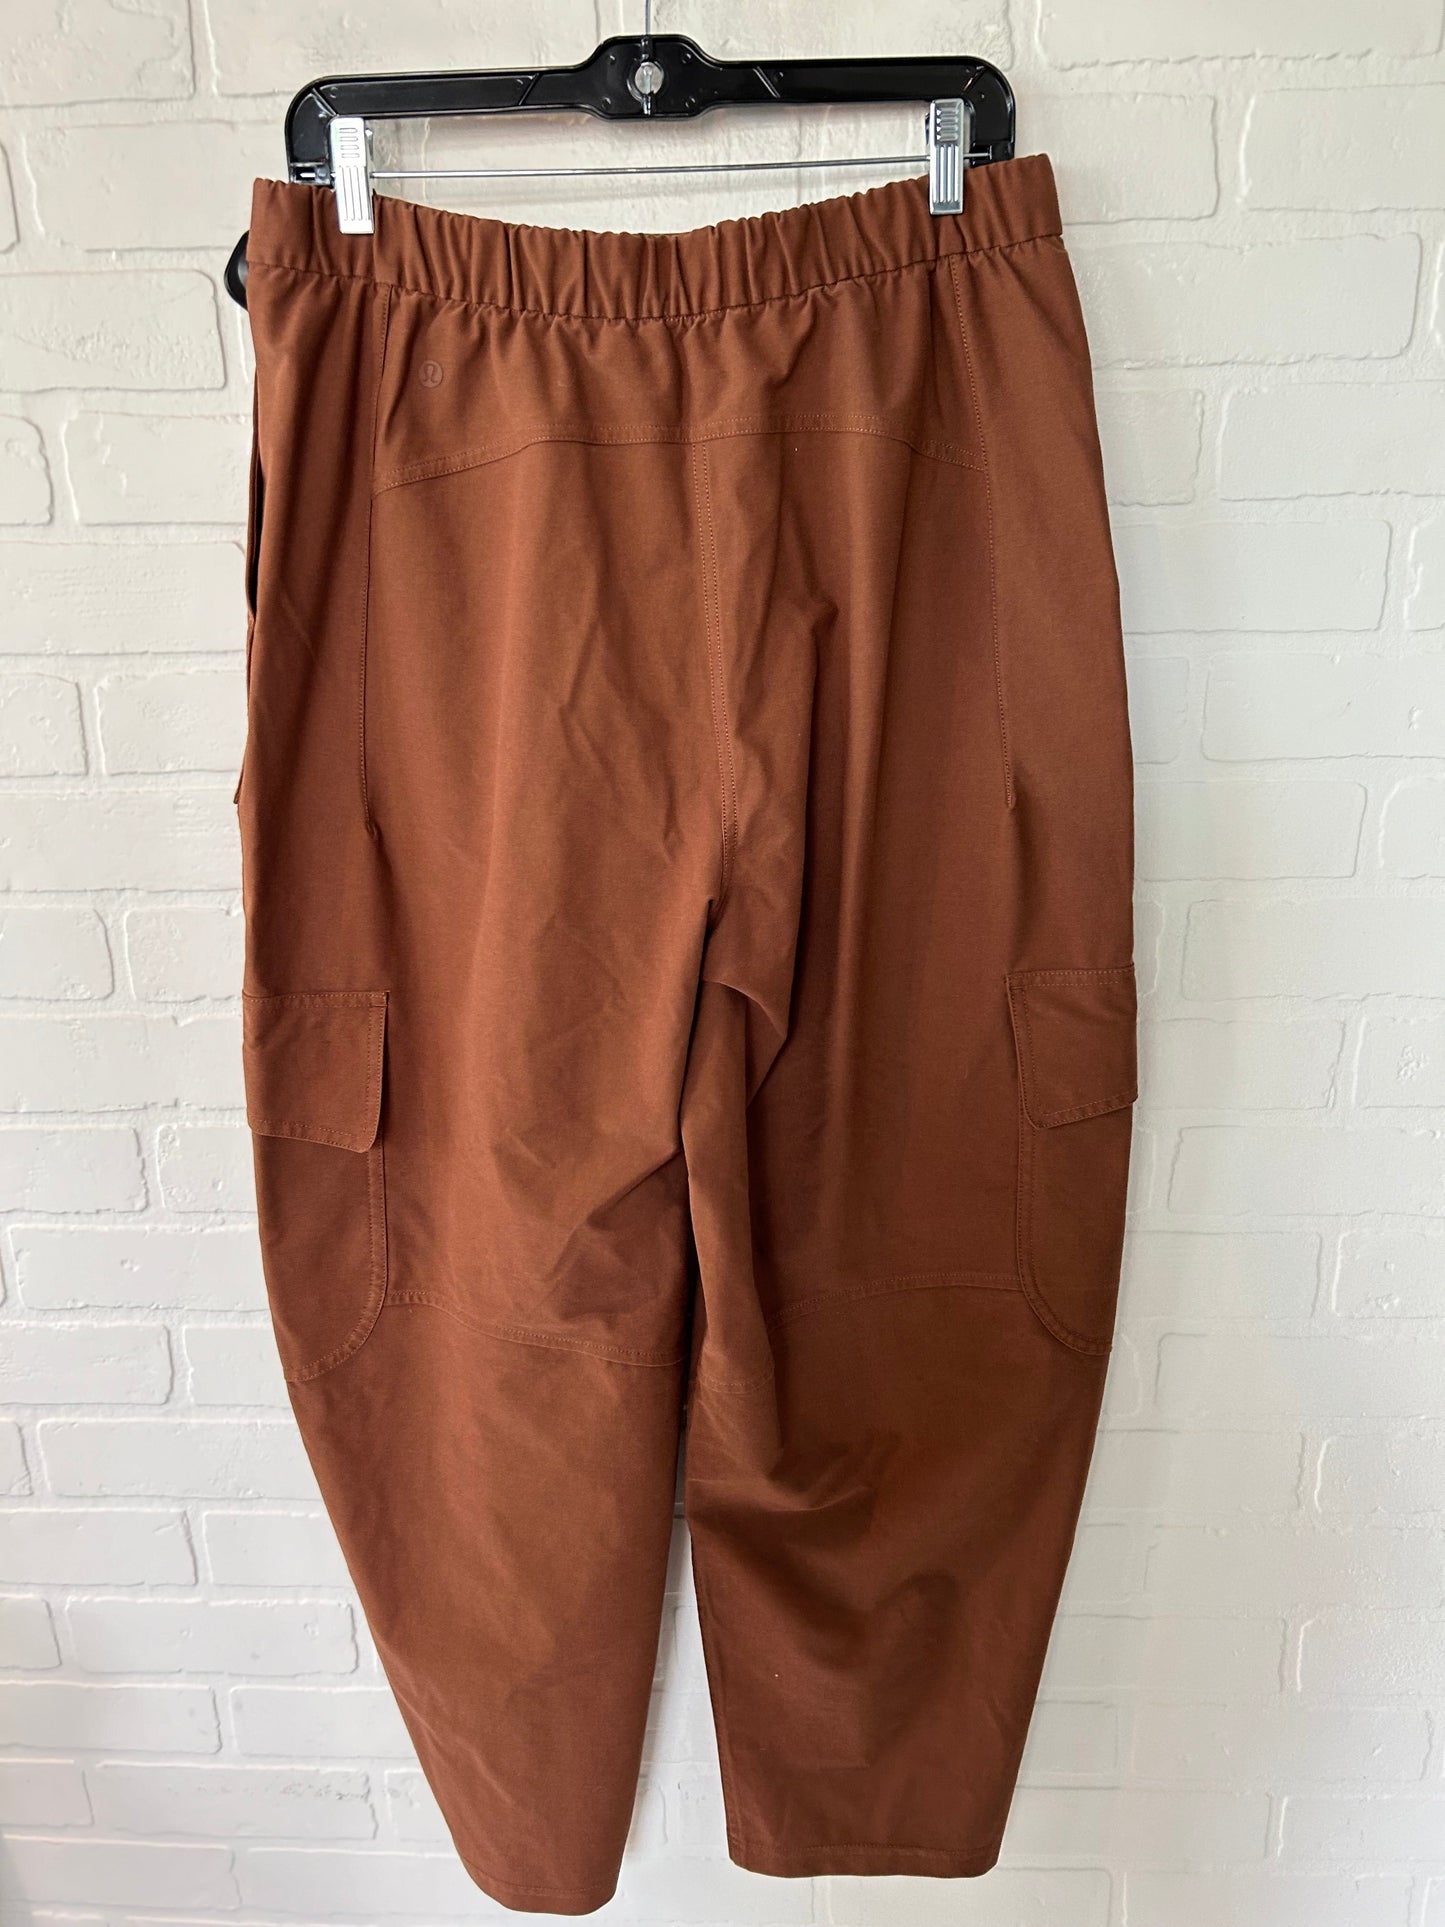 Brown Athletic Pants Lululemon, Size 12